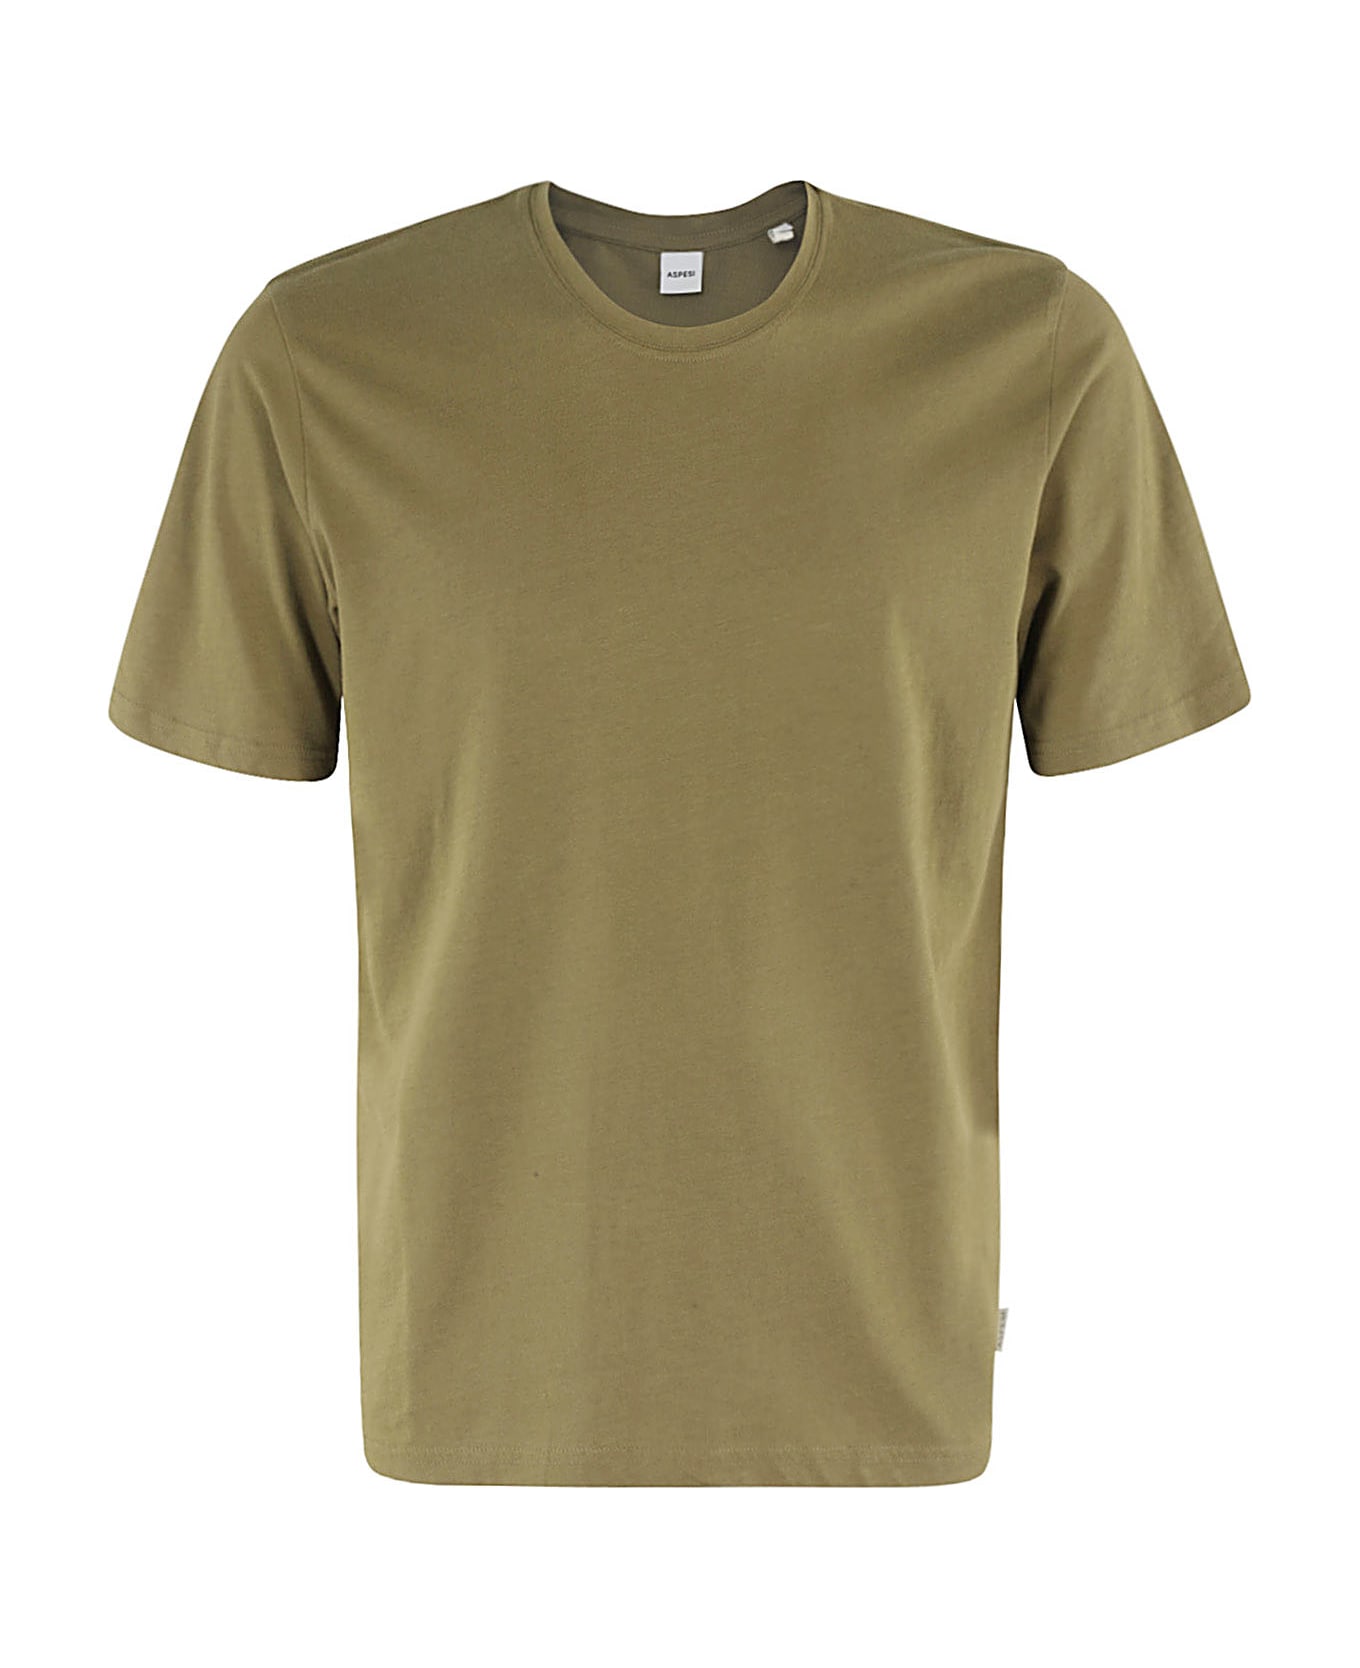 Aspesi T - Shirt Mod 3107 - Militare シャツ